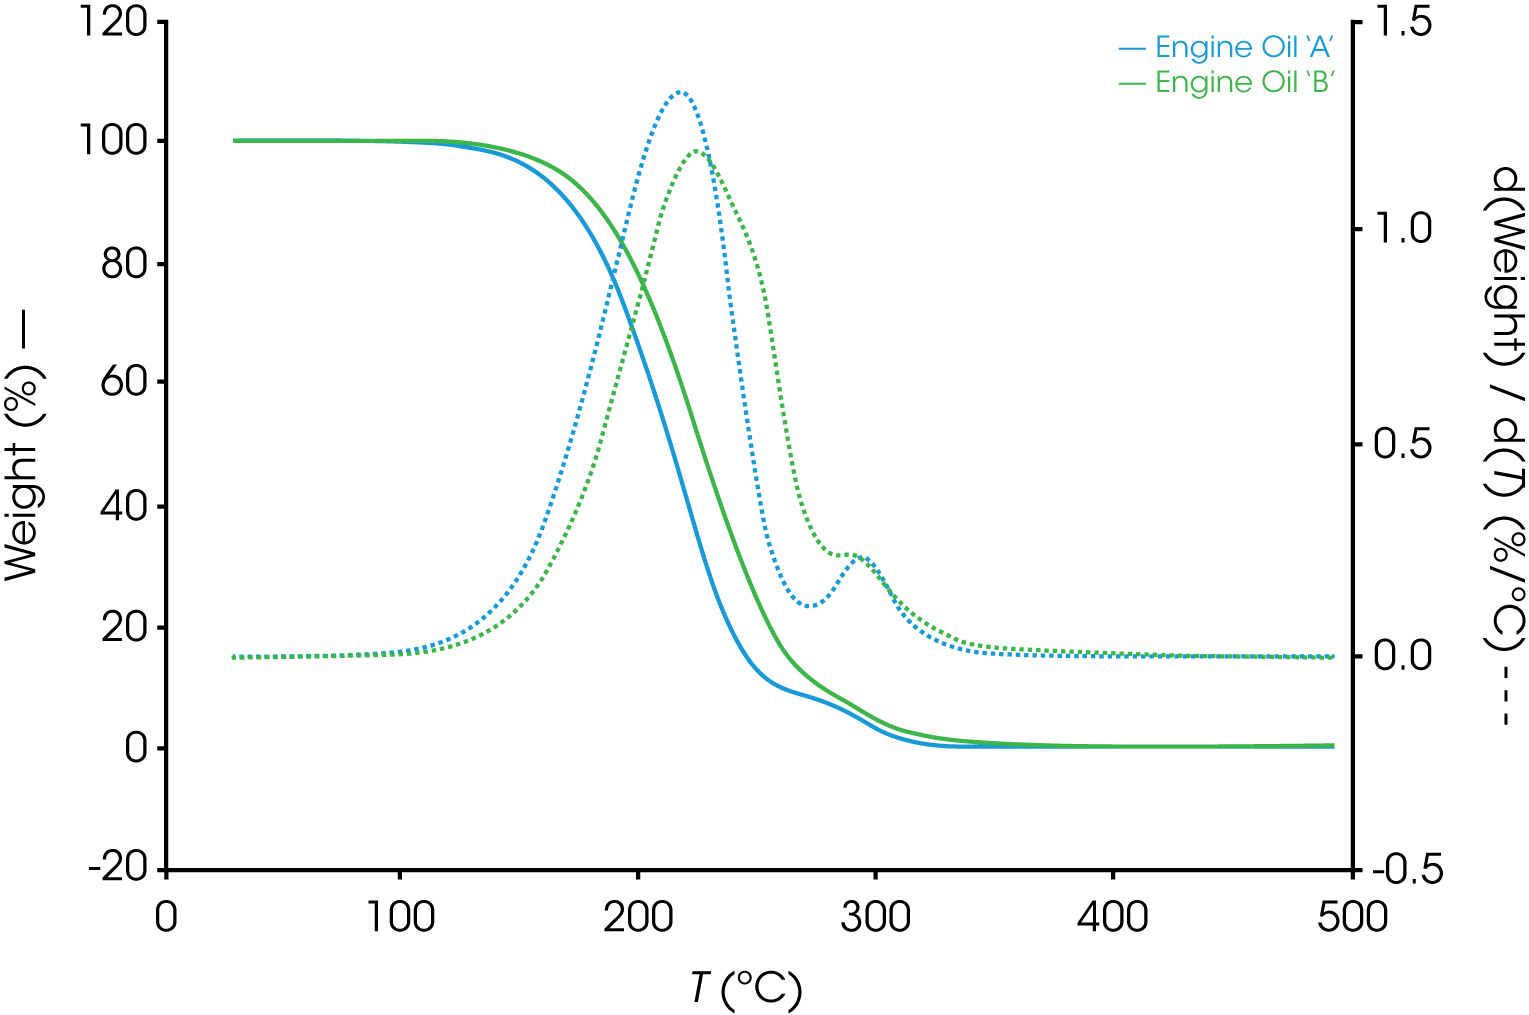 Figure 3. TGA Mass Loss Comparisons for Engine Oils ‘A’ and ‘B’